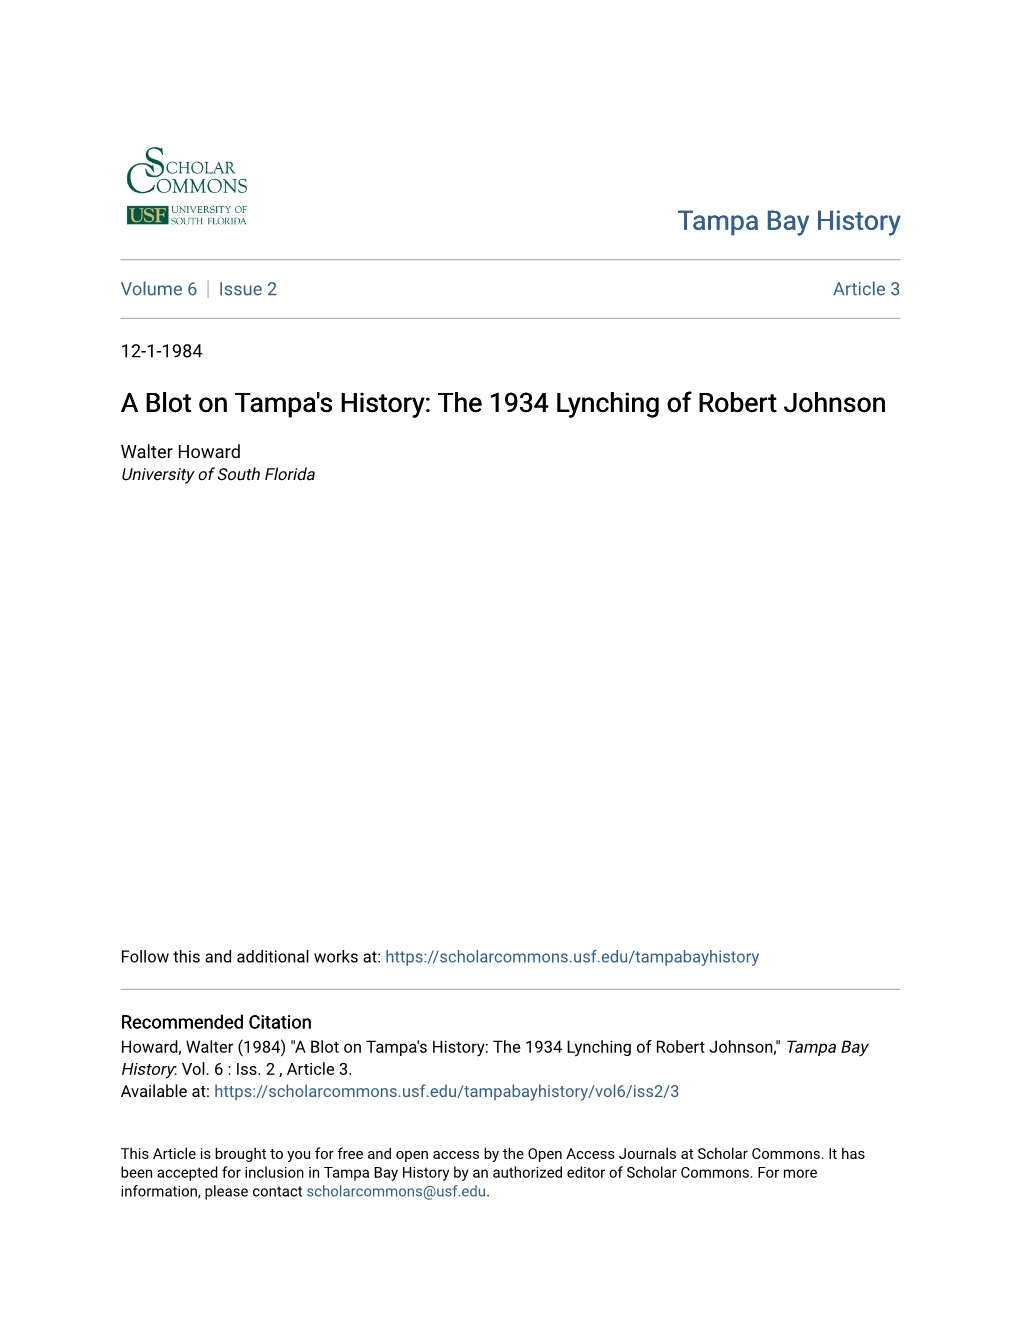 A Blot on Tampa's History: the 1934 Lynching of Robert Johnson